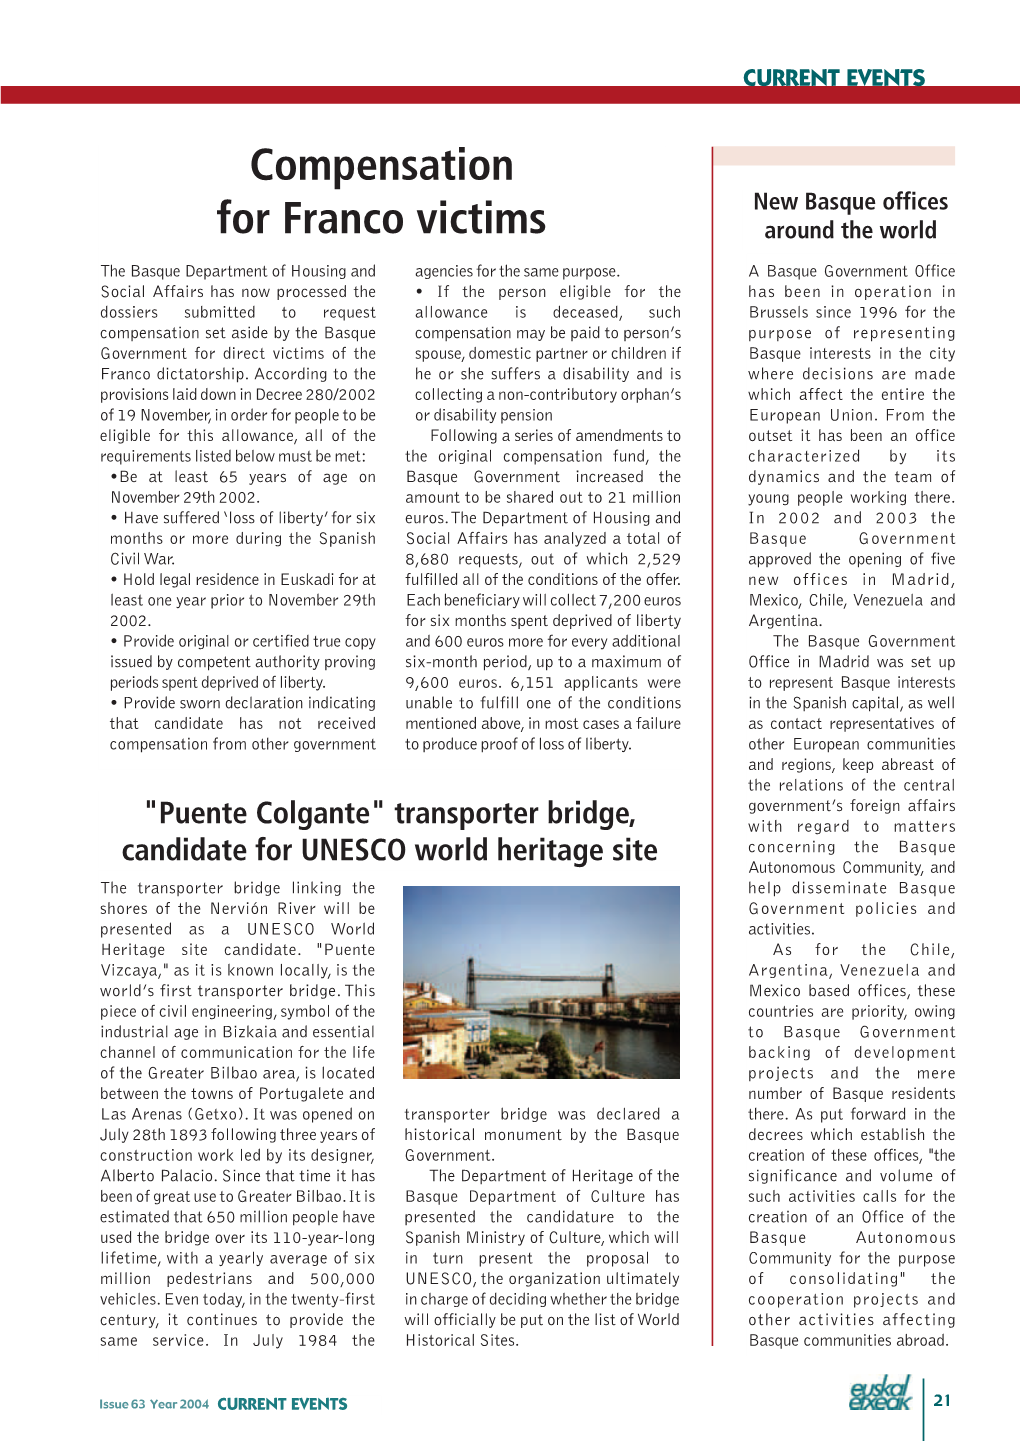 Compensation for Franco Victims